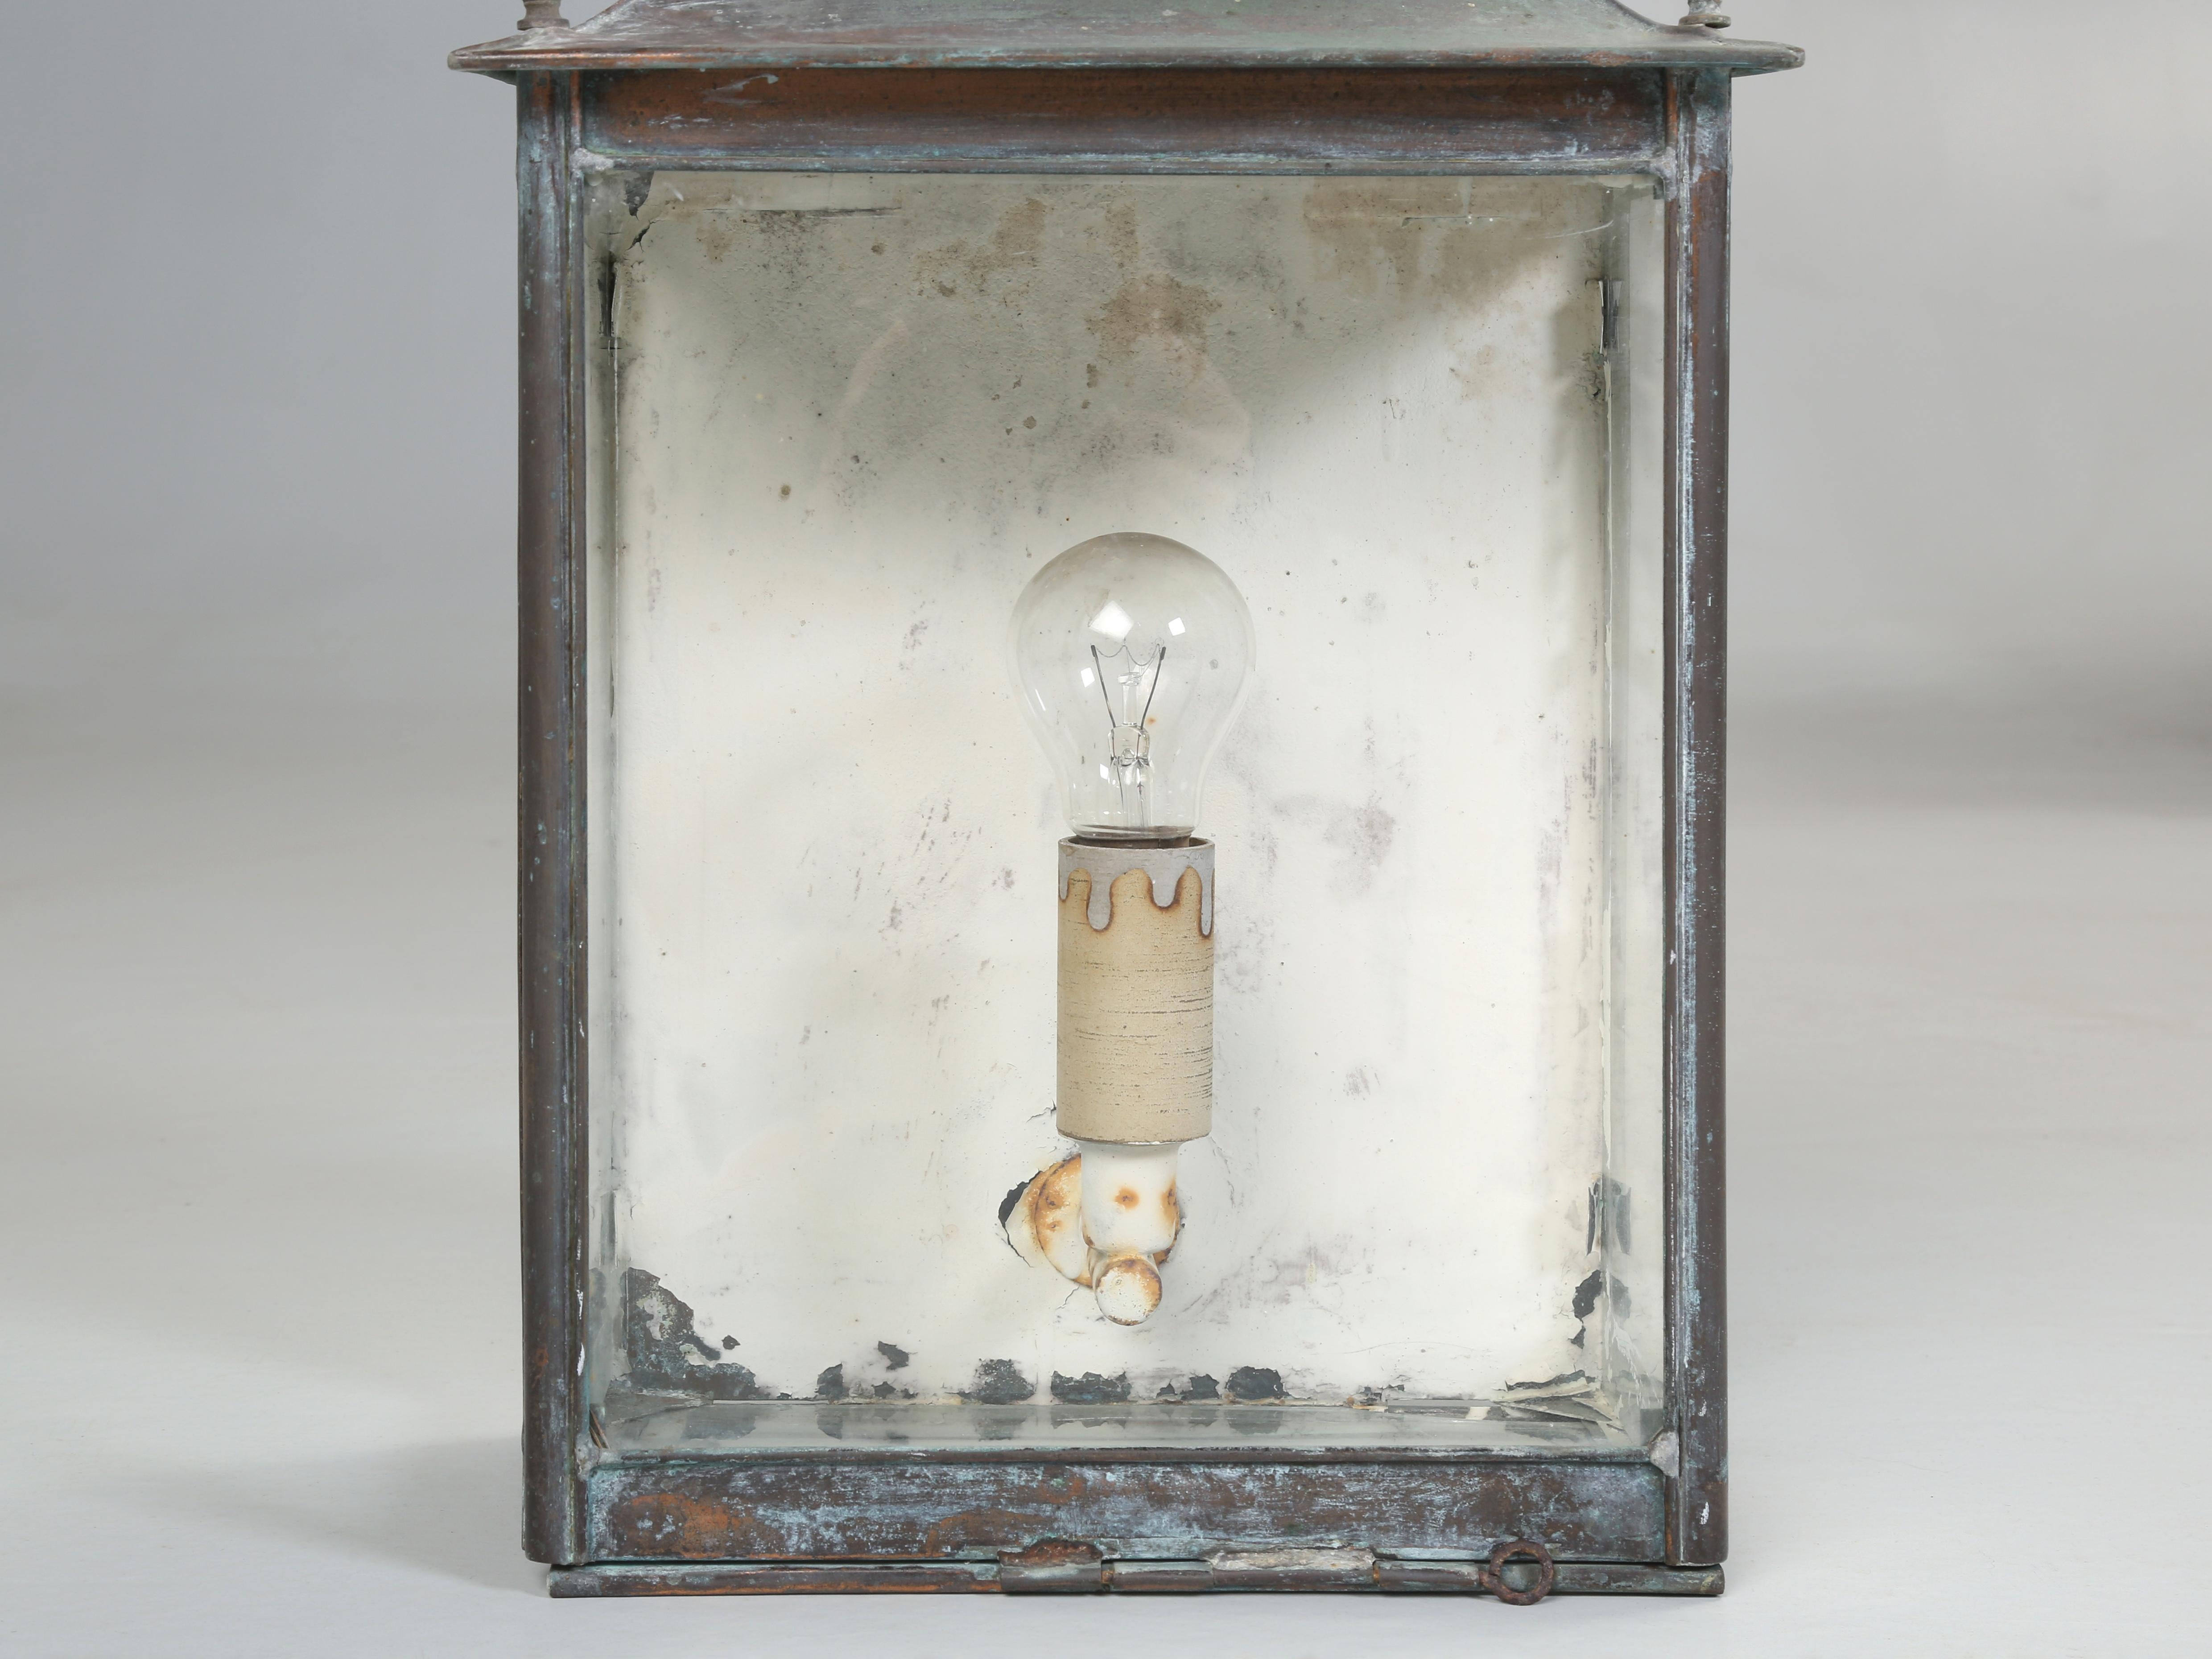 Antique French Copper Lantern Original Unrestored Condition Beautiful Patina  2